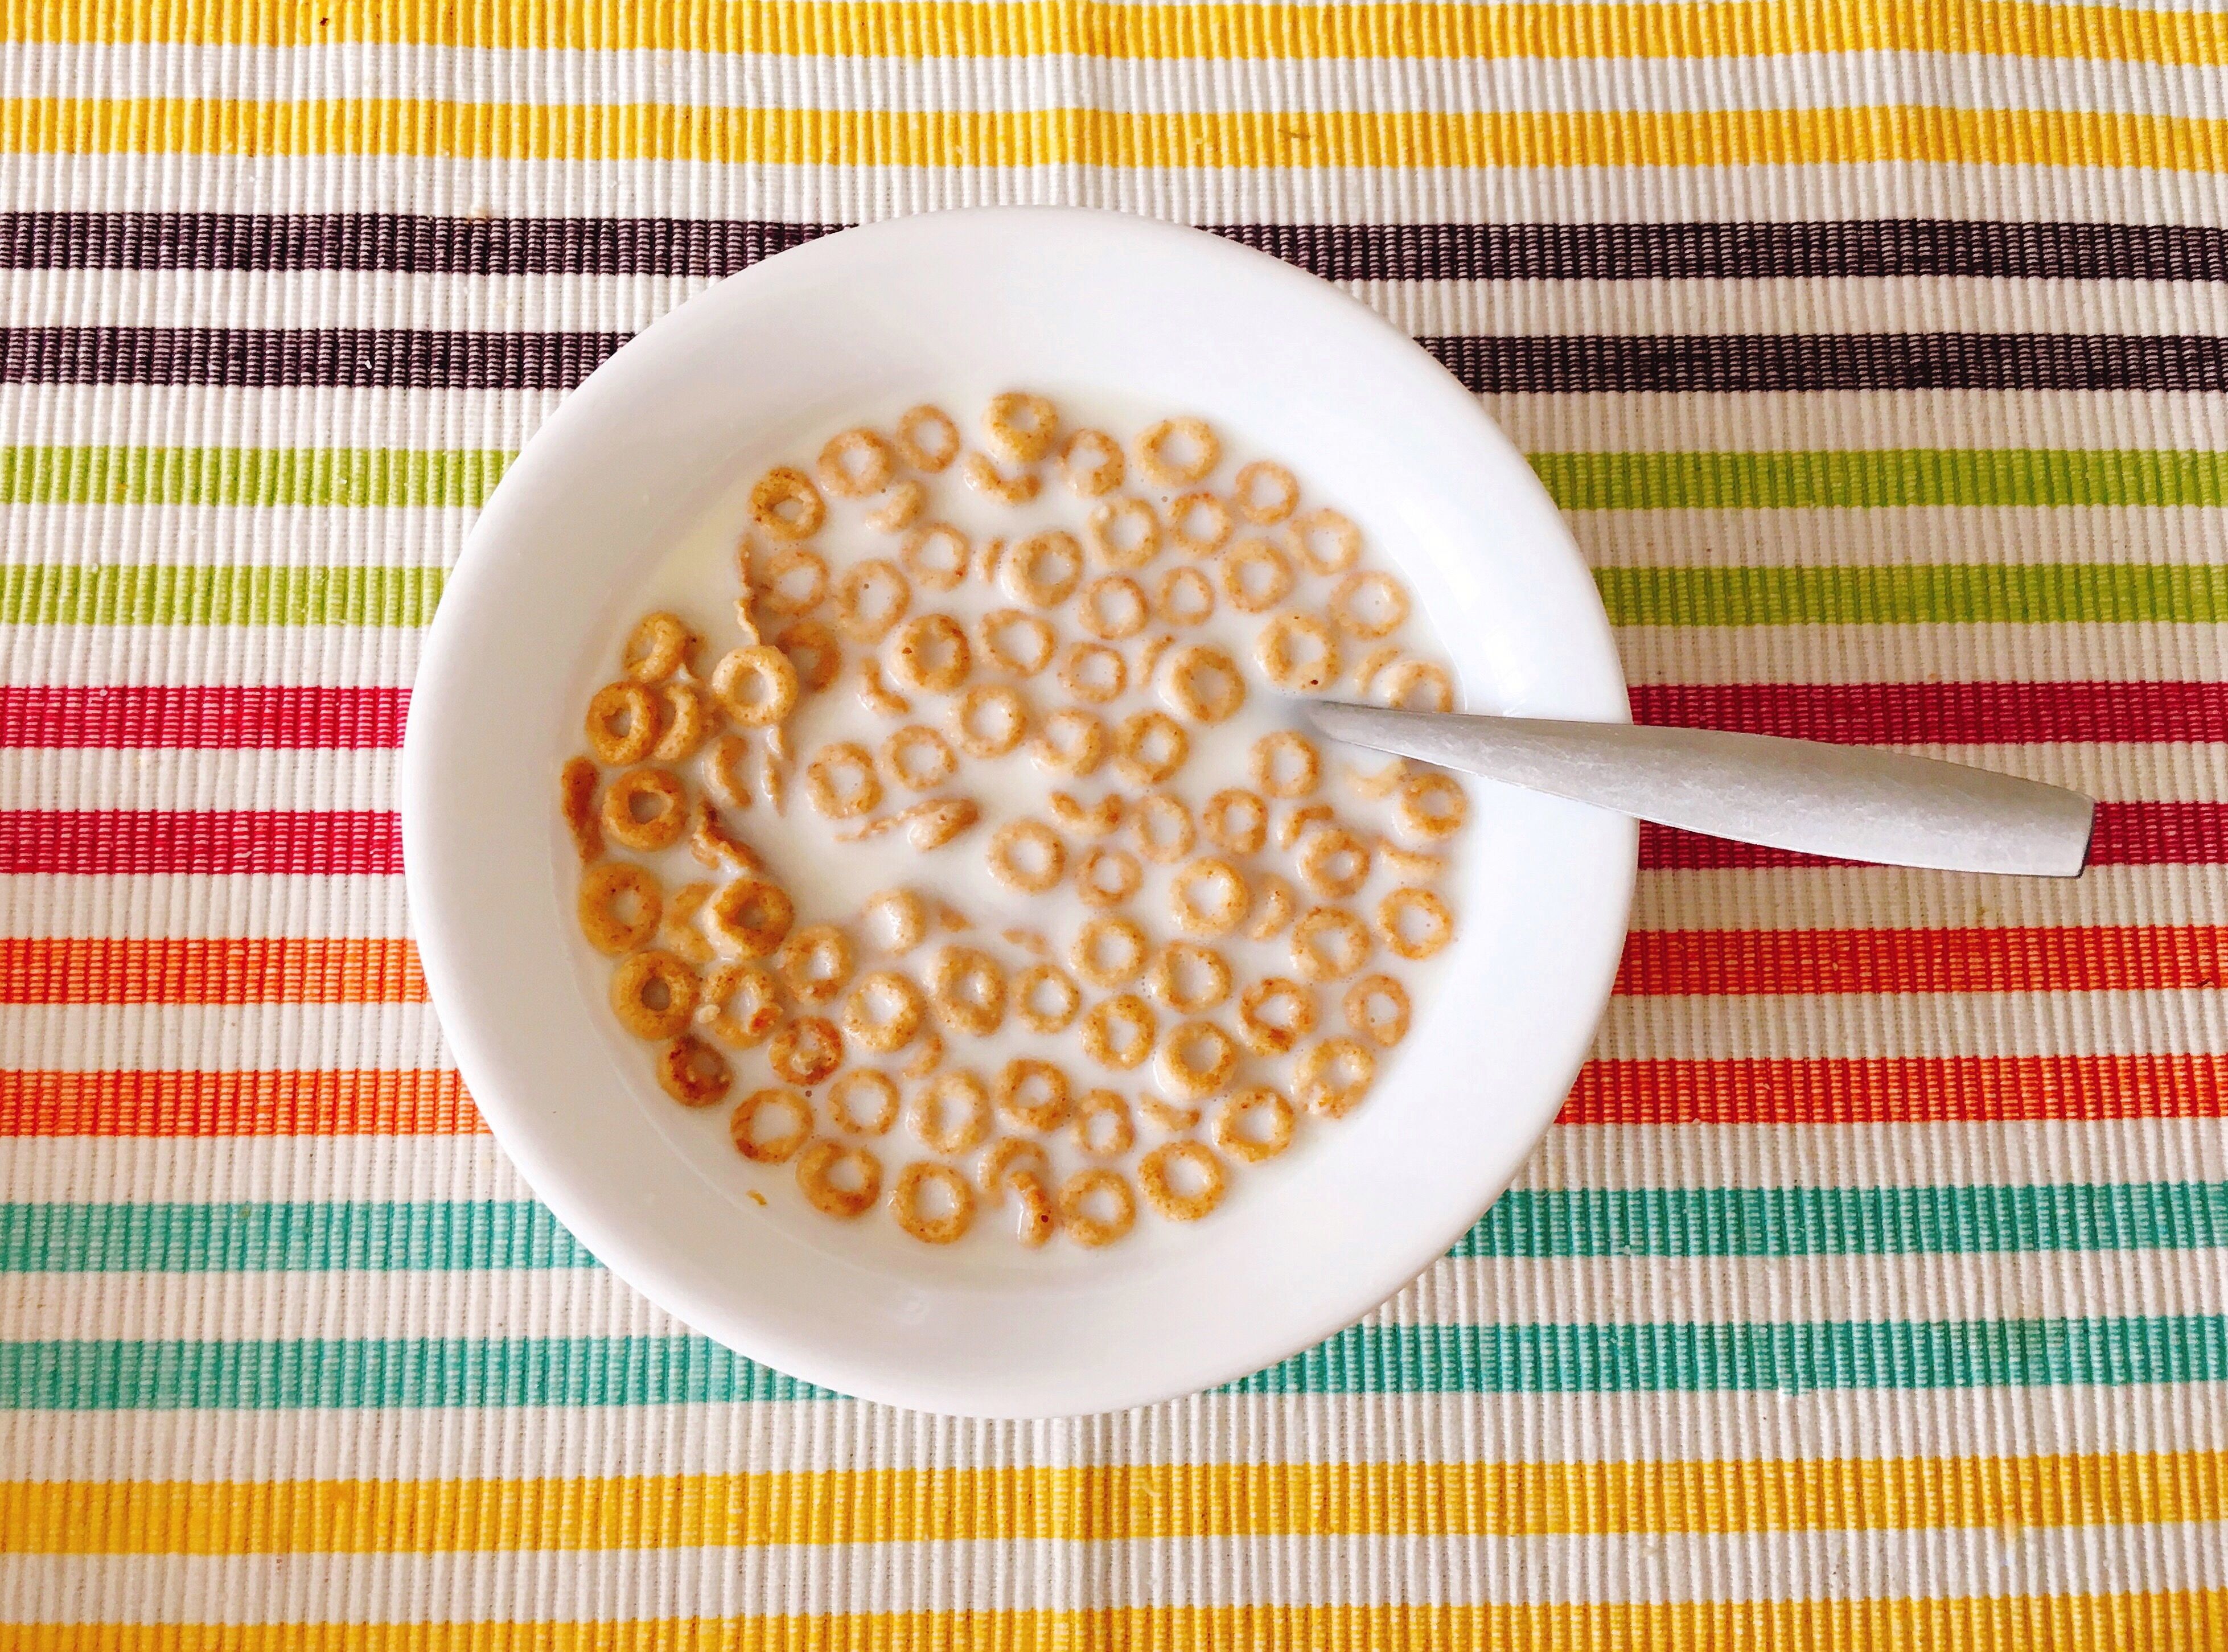 Grain-Free Cereal Original Cups – 8 Count